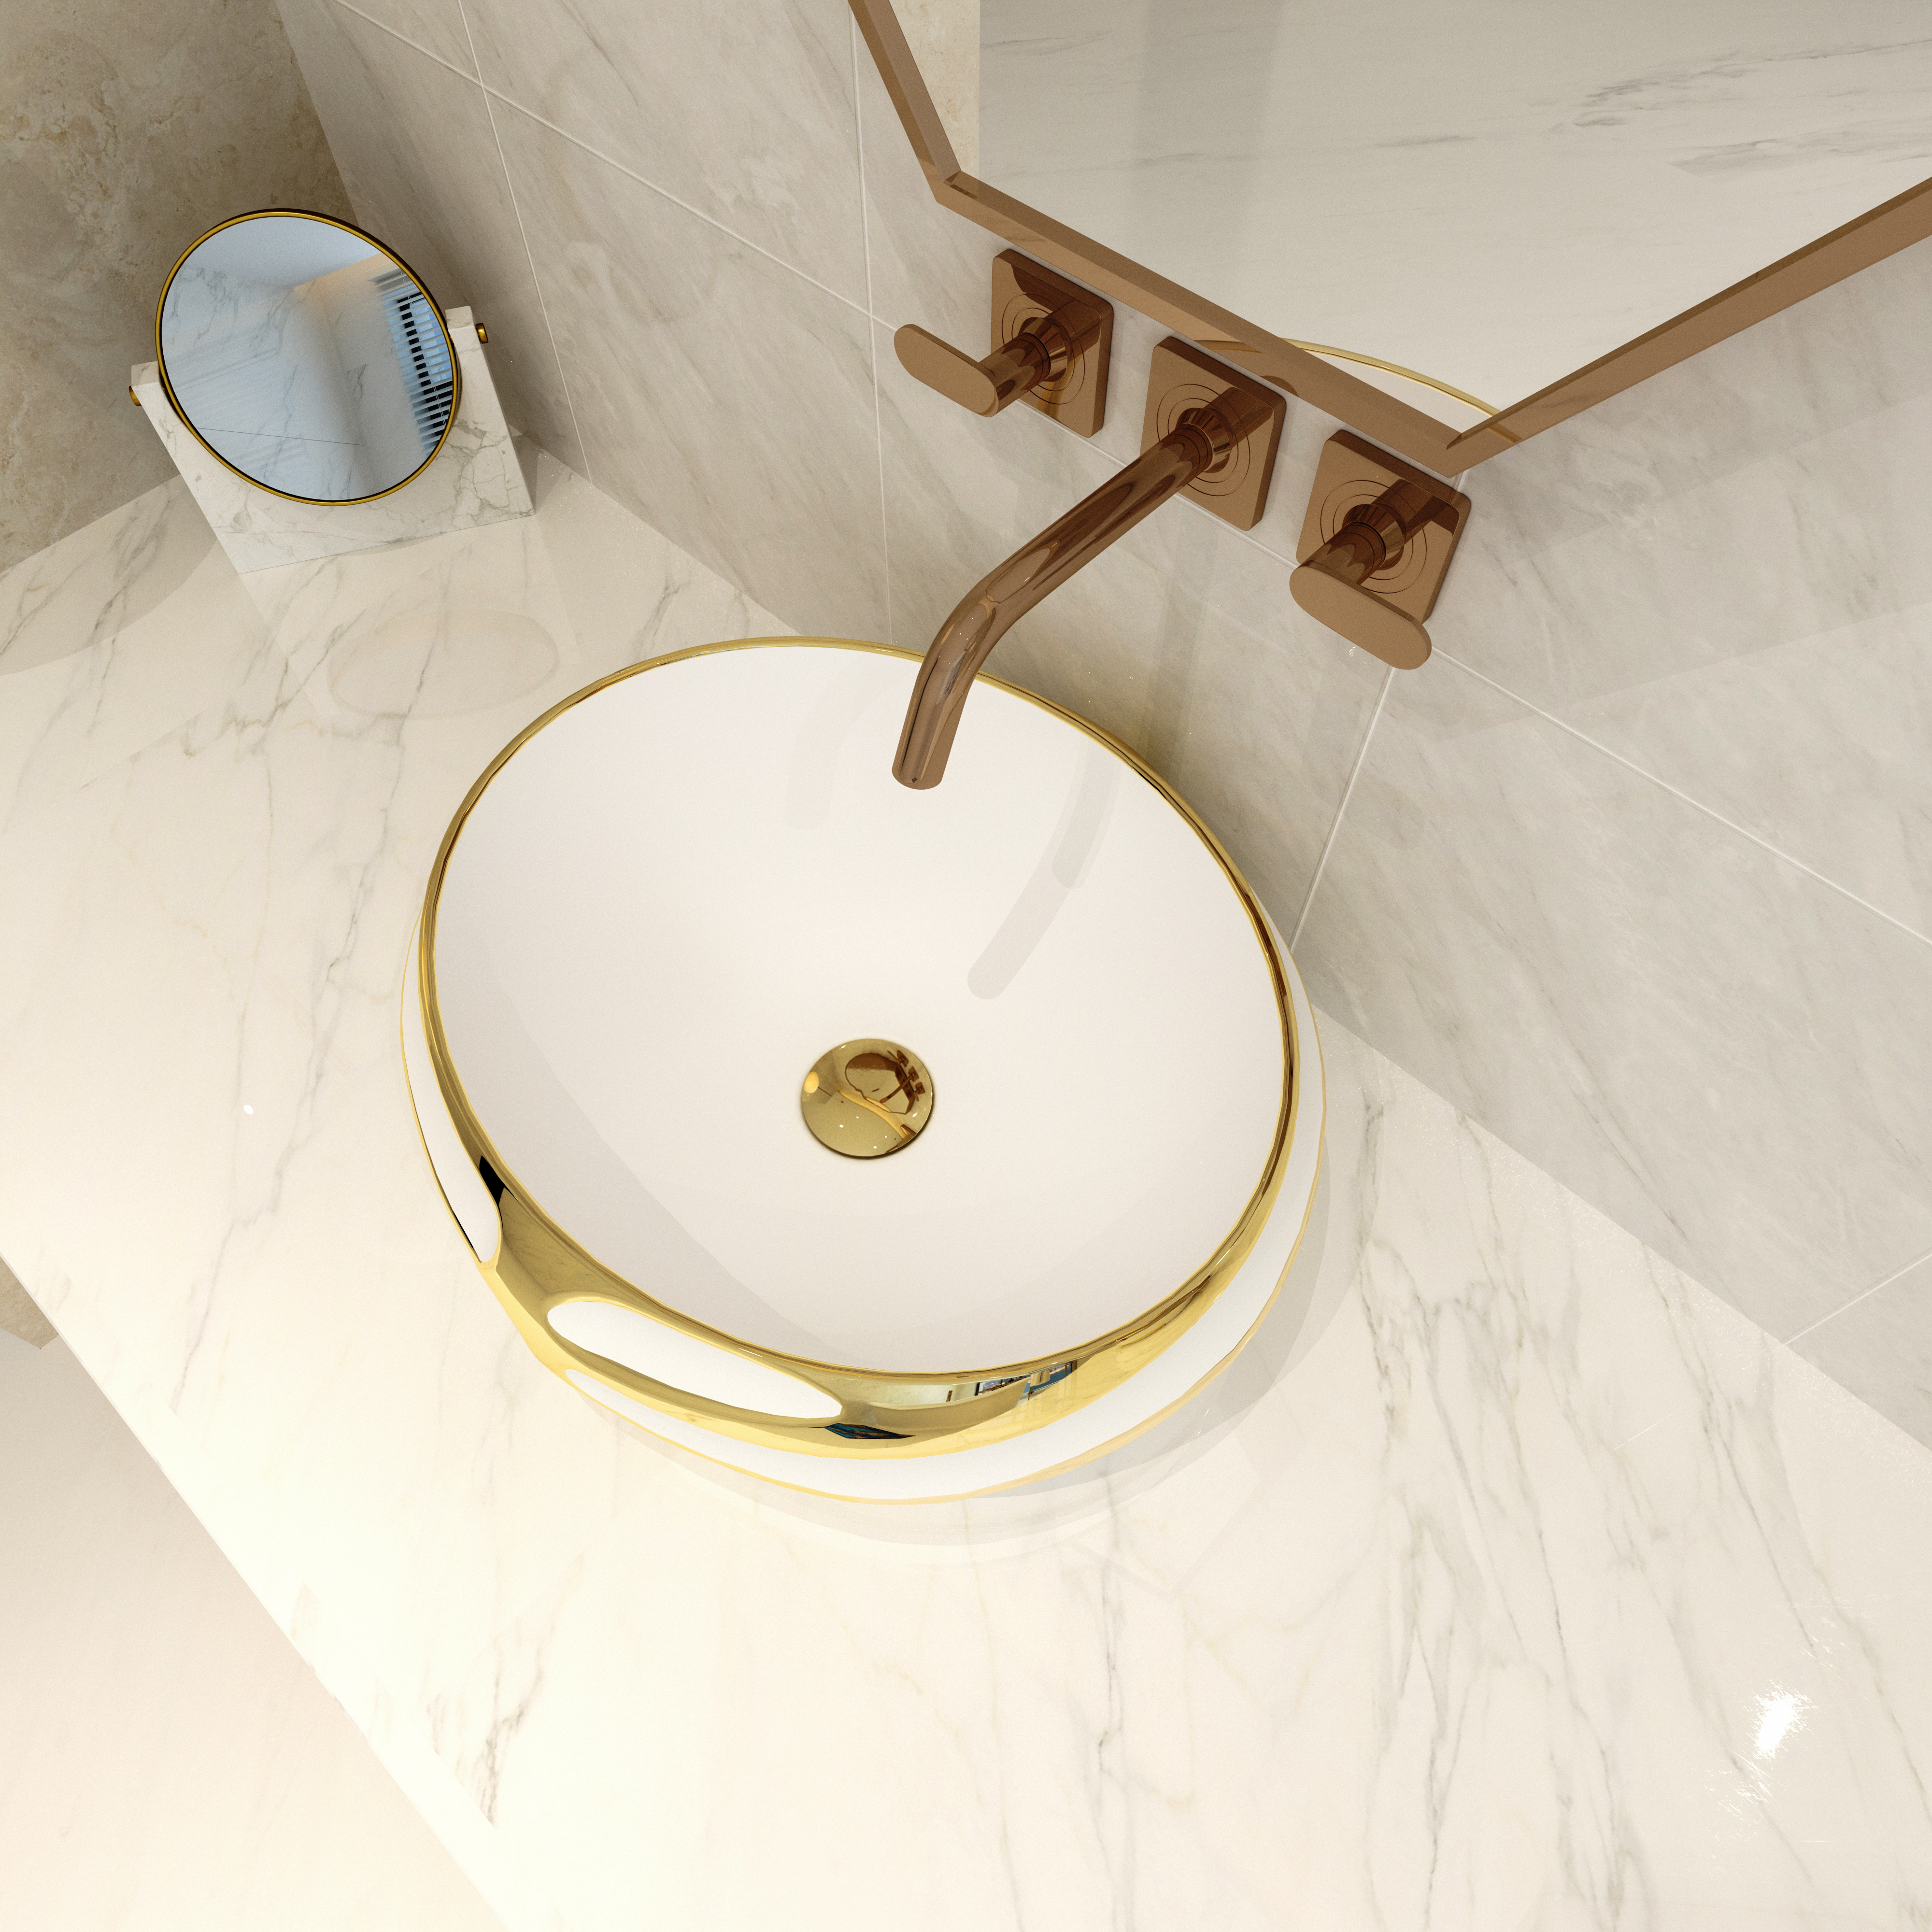 MEJE 18 Inch Above Counter Art Basin Oval Embossed Pattern With Gold Trim Design, Countertop Bathroom Vessel Sink, Porcelain Ceramic Vanity Sink (Include pop up drain)